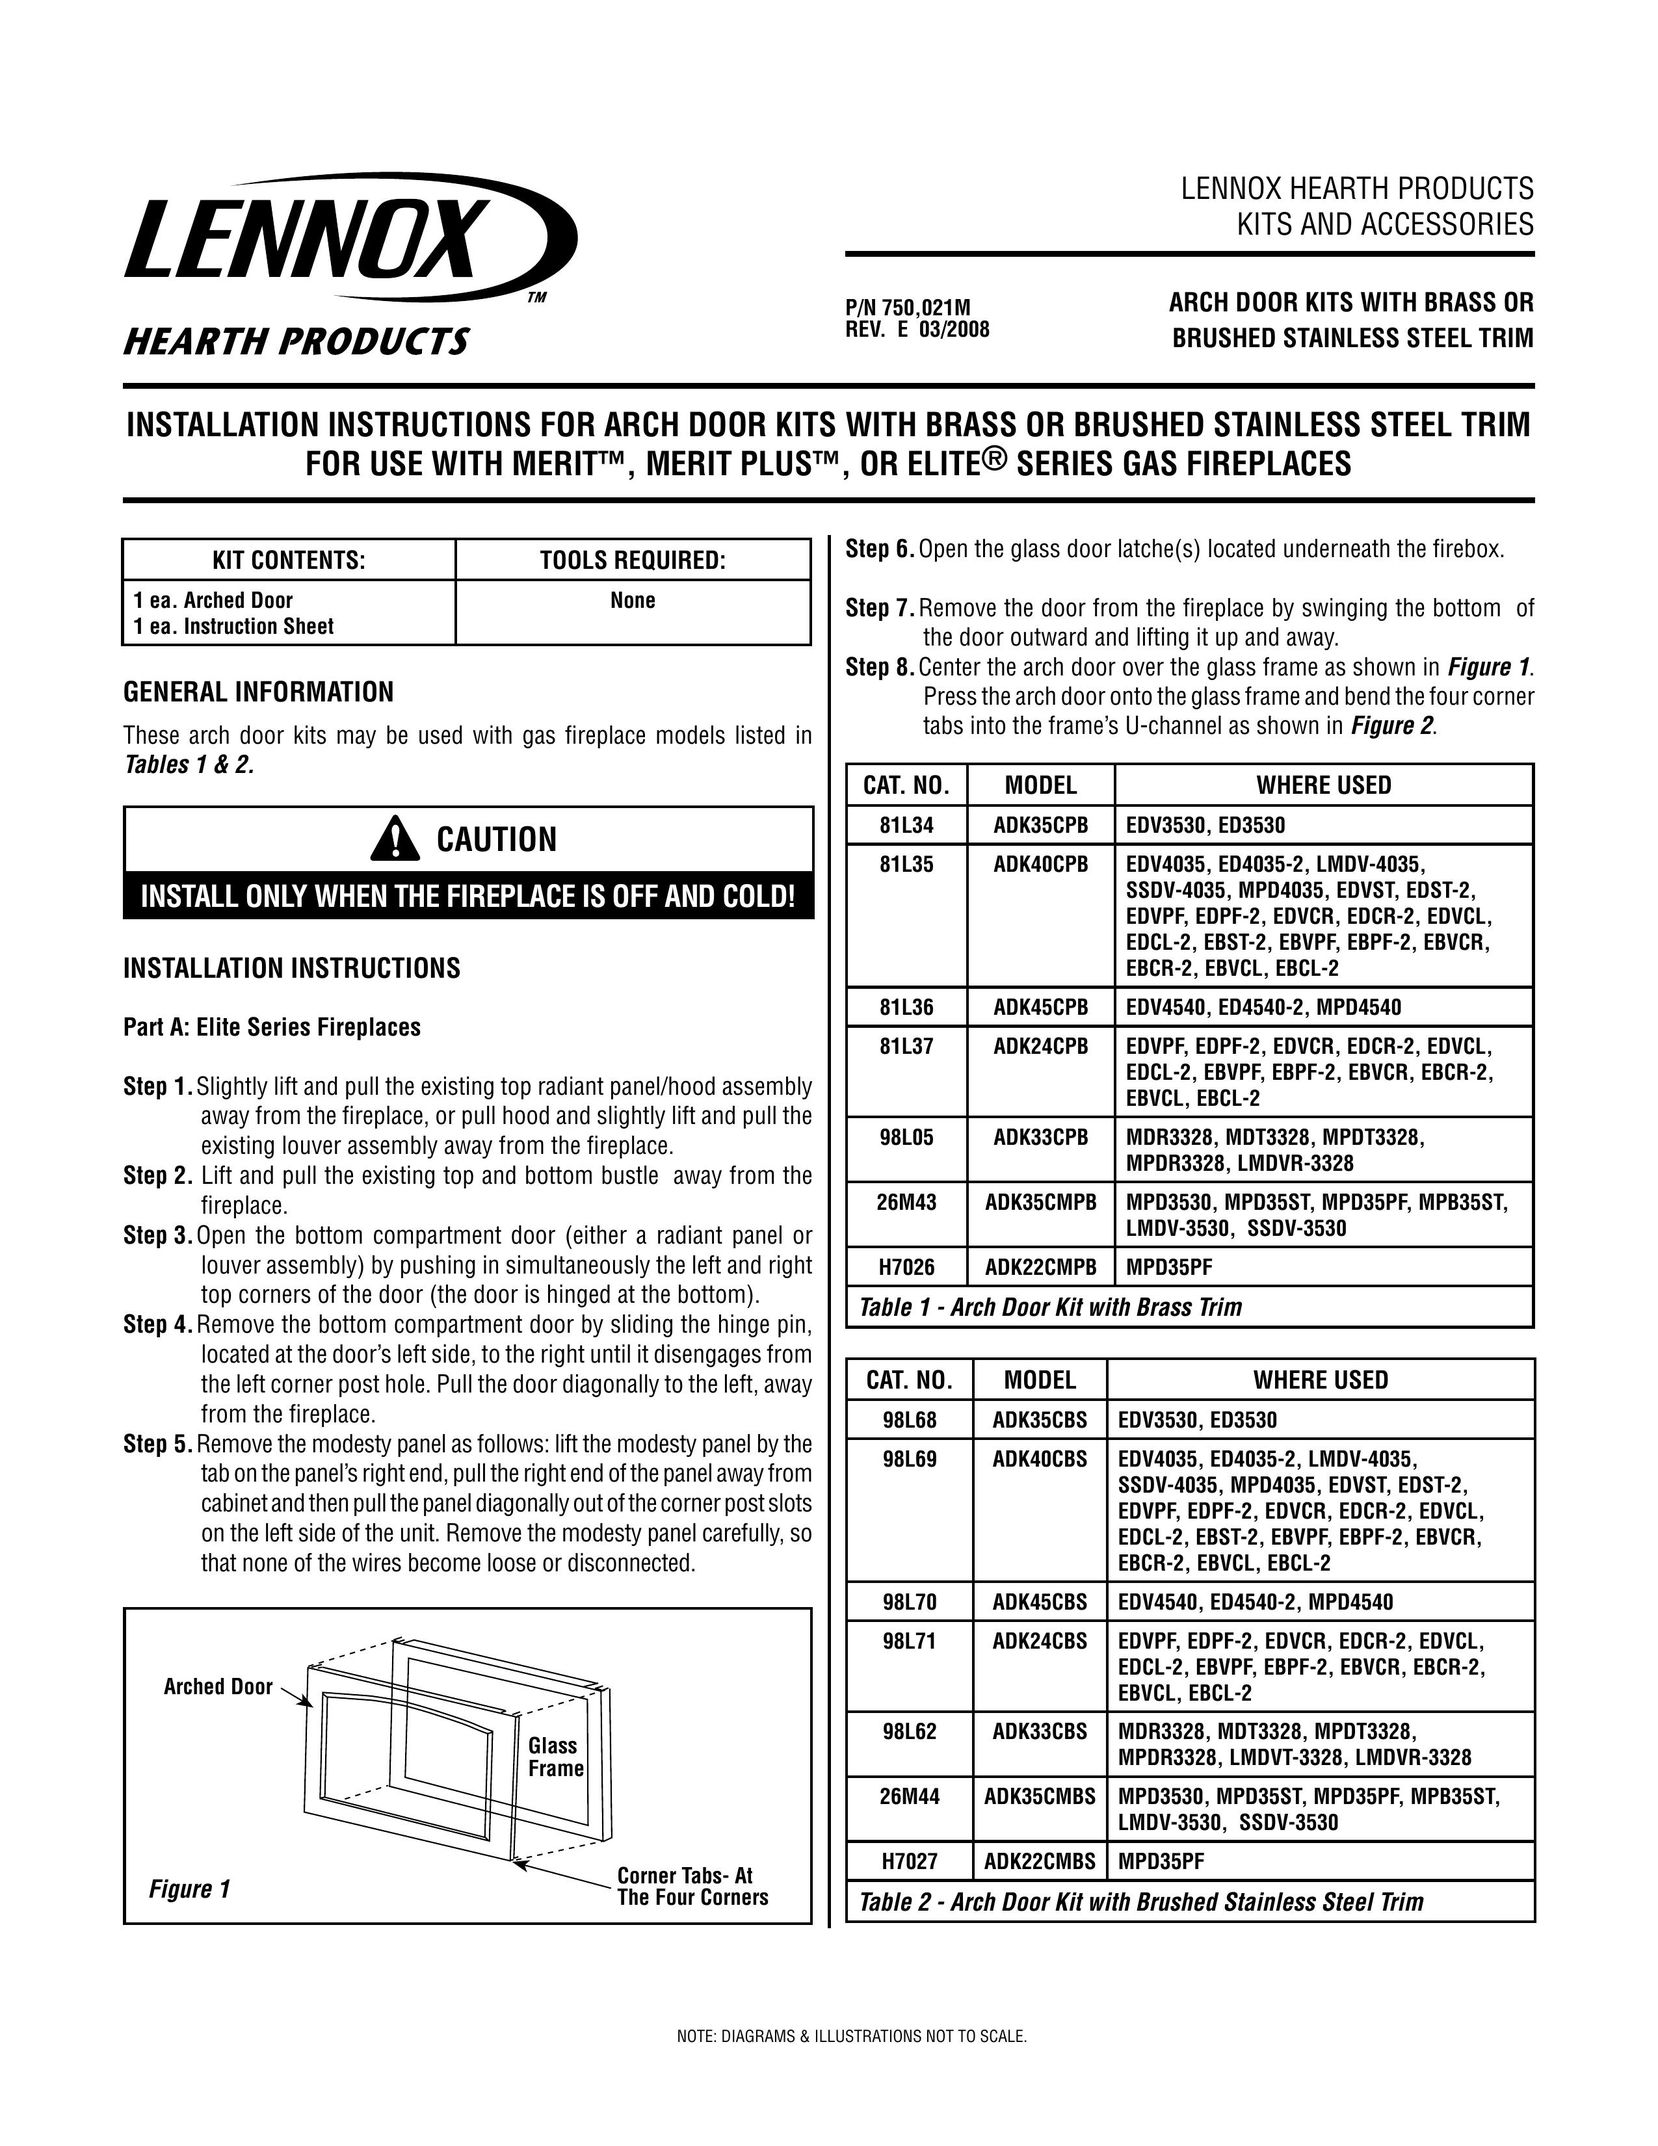 Lennox Hearth ADK24CBS Indoor Fireplace User Manual